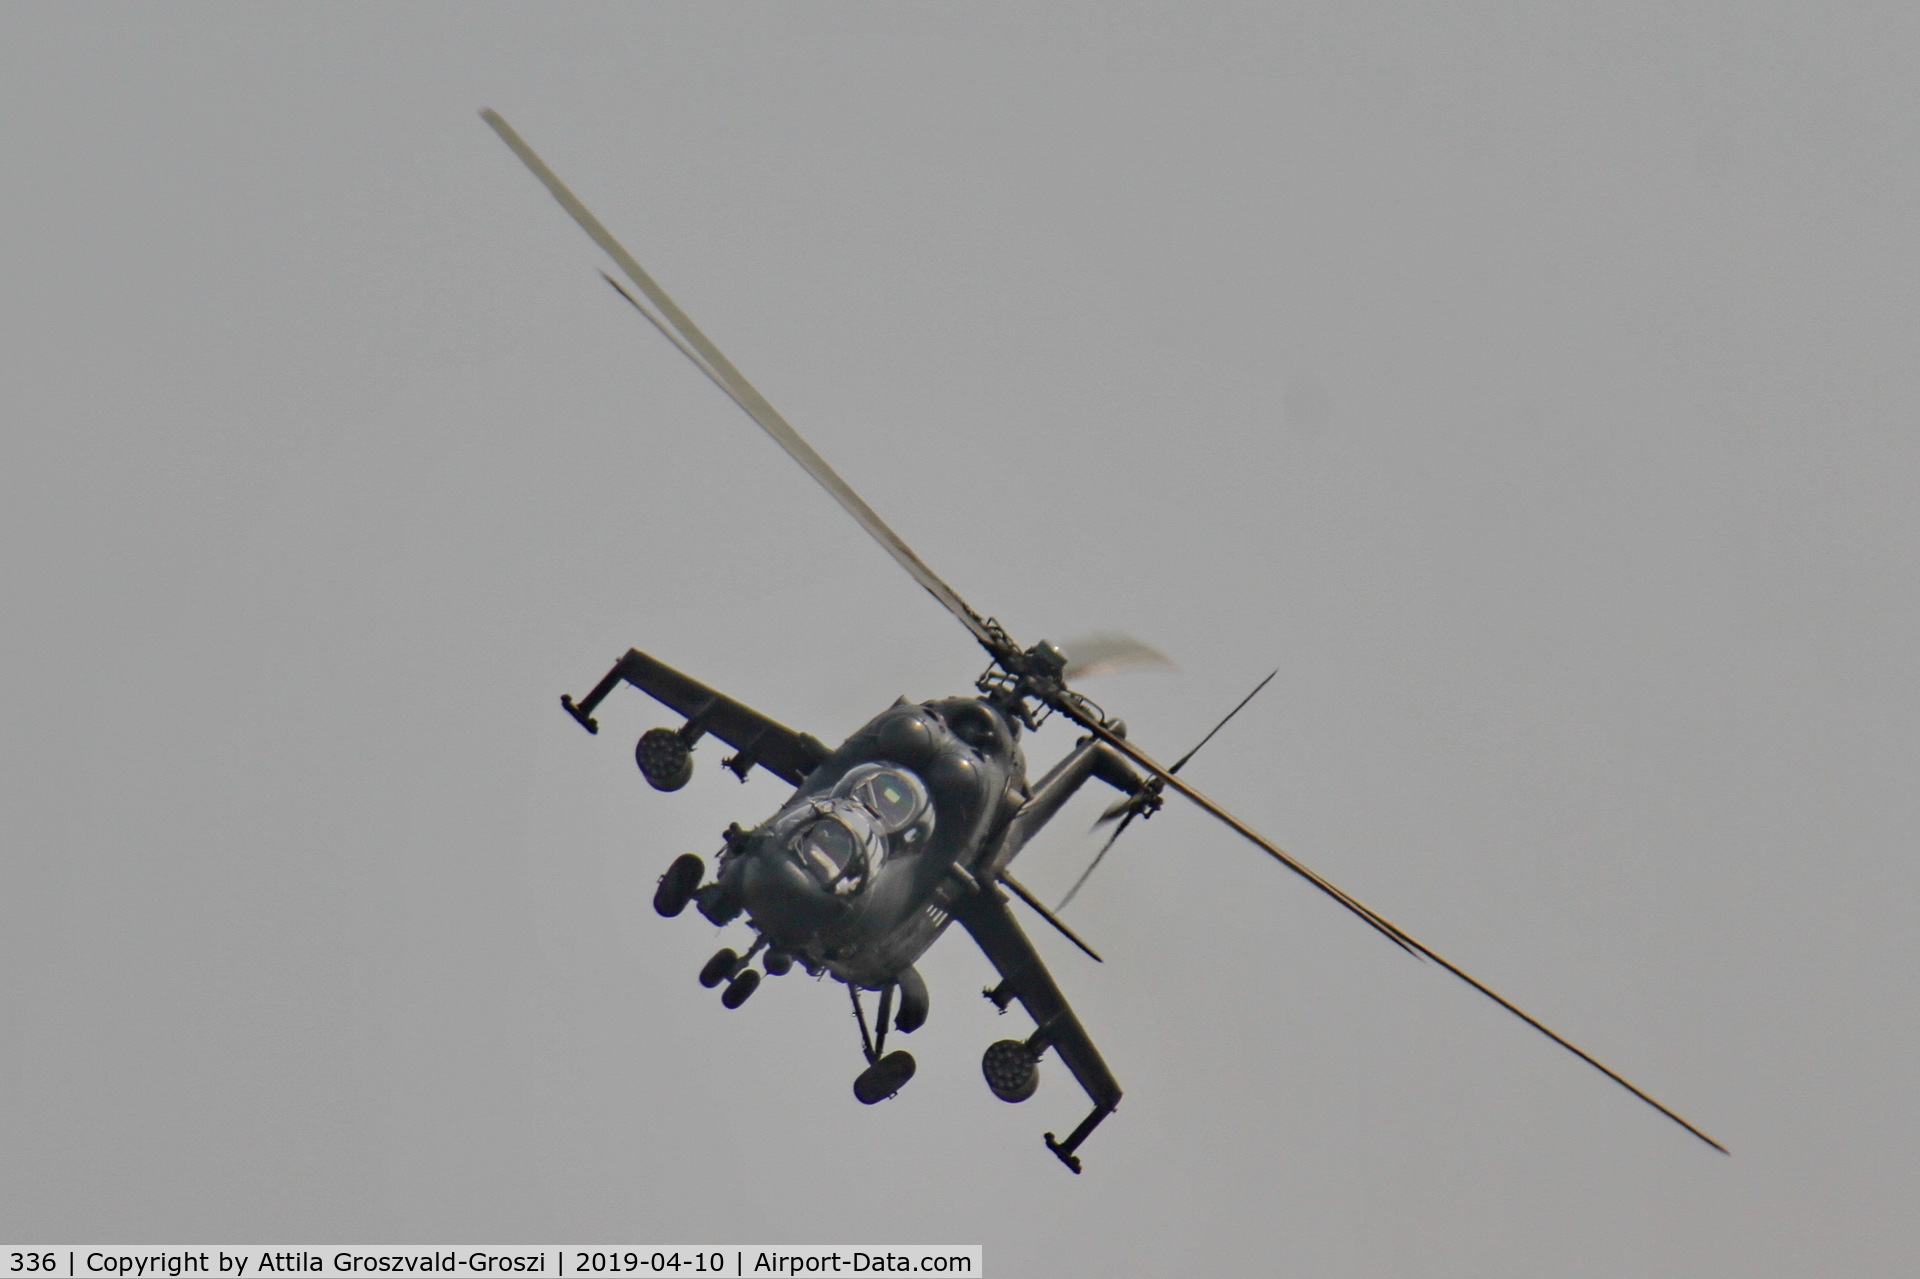 336, 1989 Mil Mi-24P Hind F C/N 340336, Jutas-Ujmajor. The Hungarian airforce is his practising base